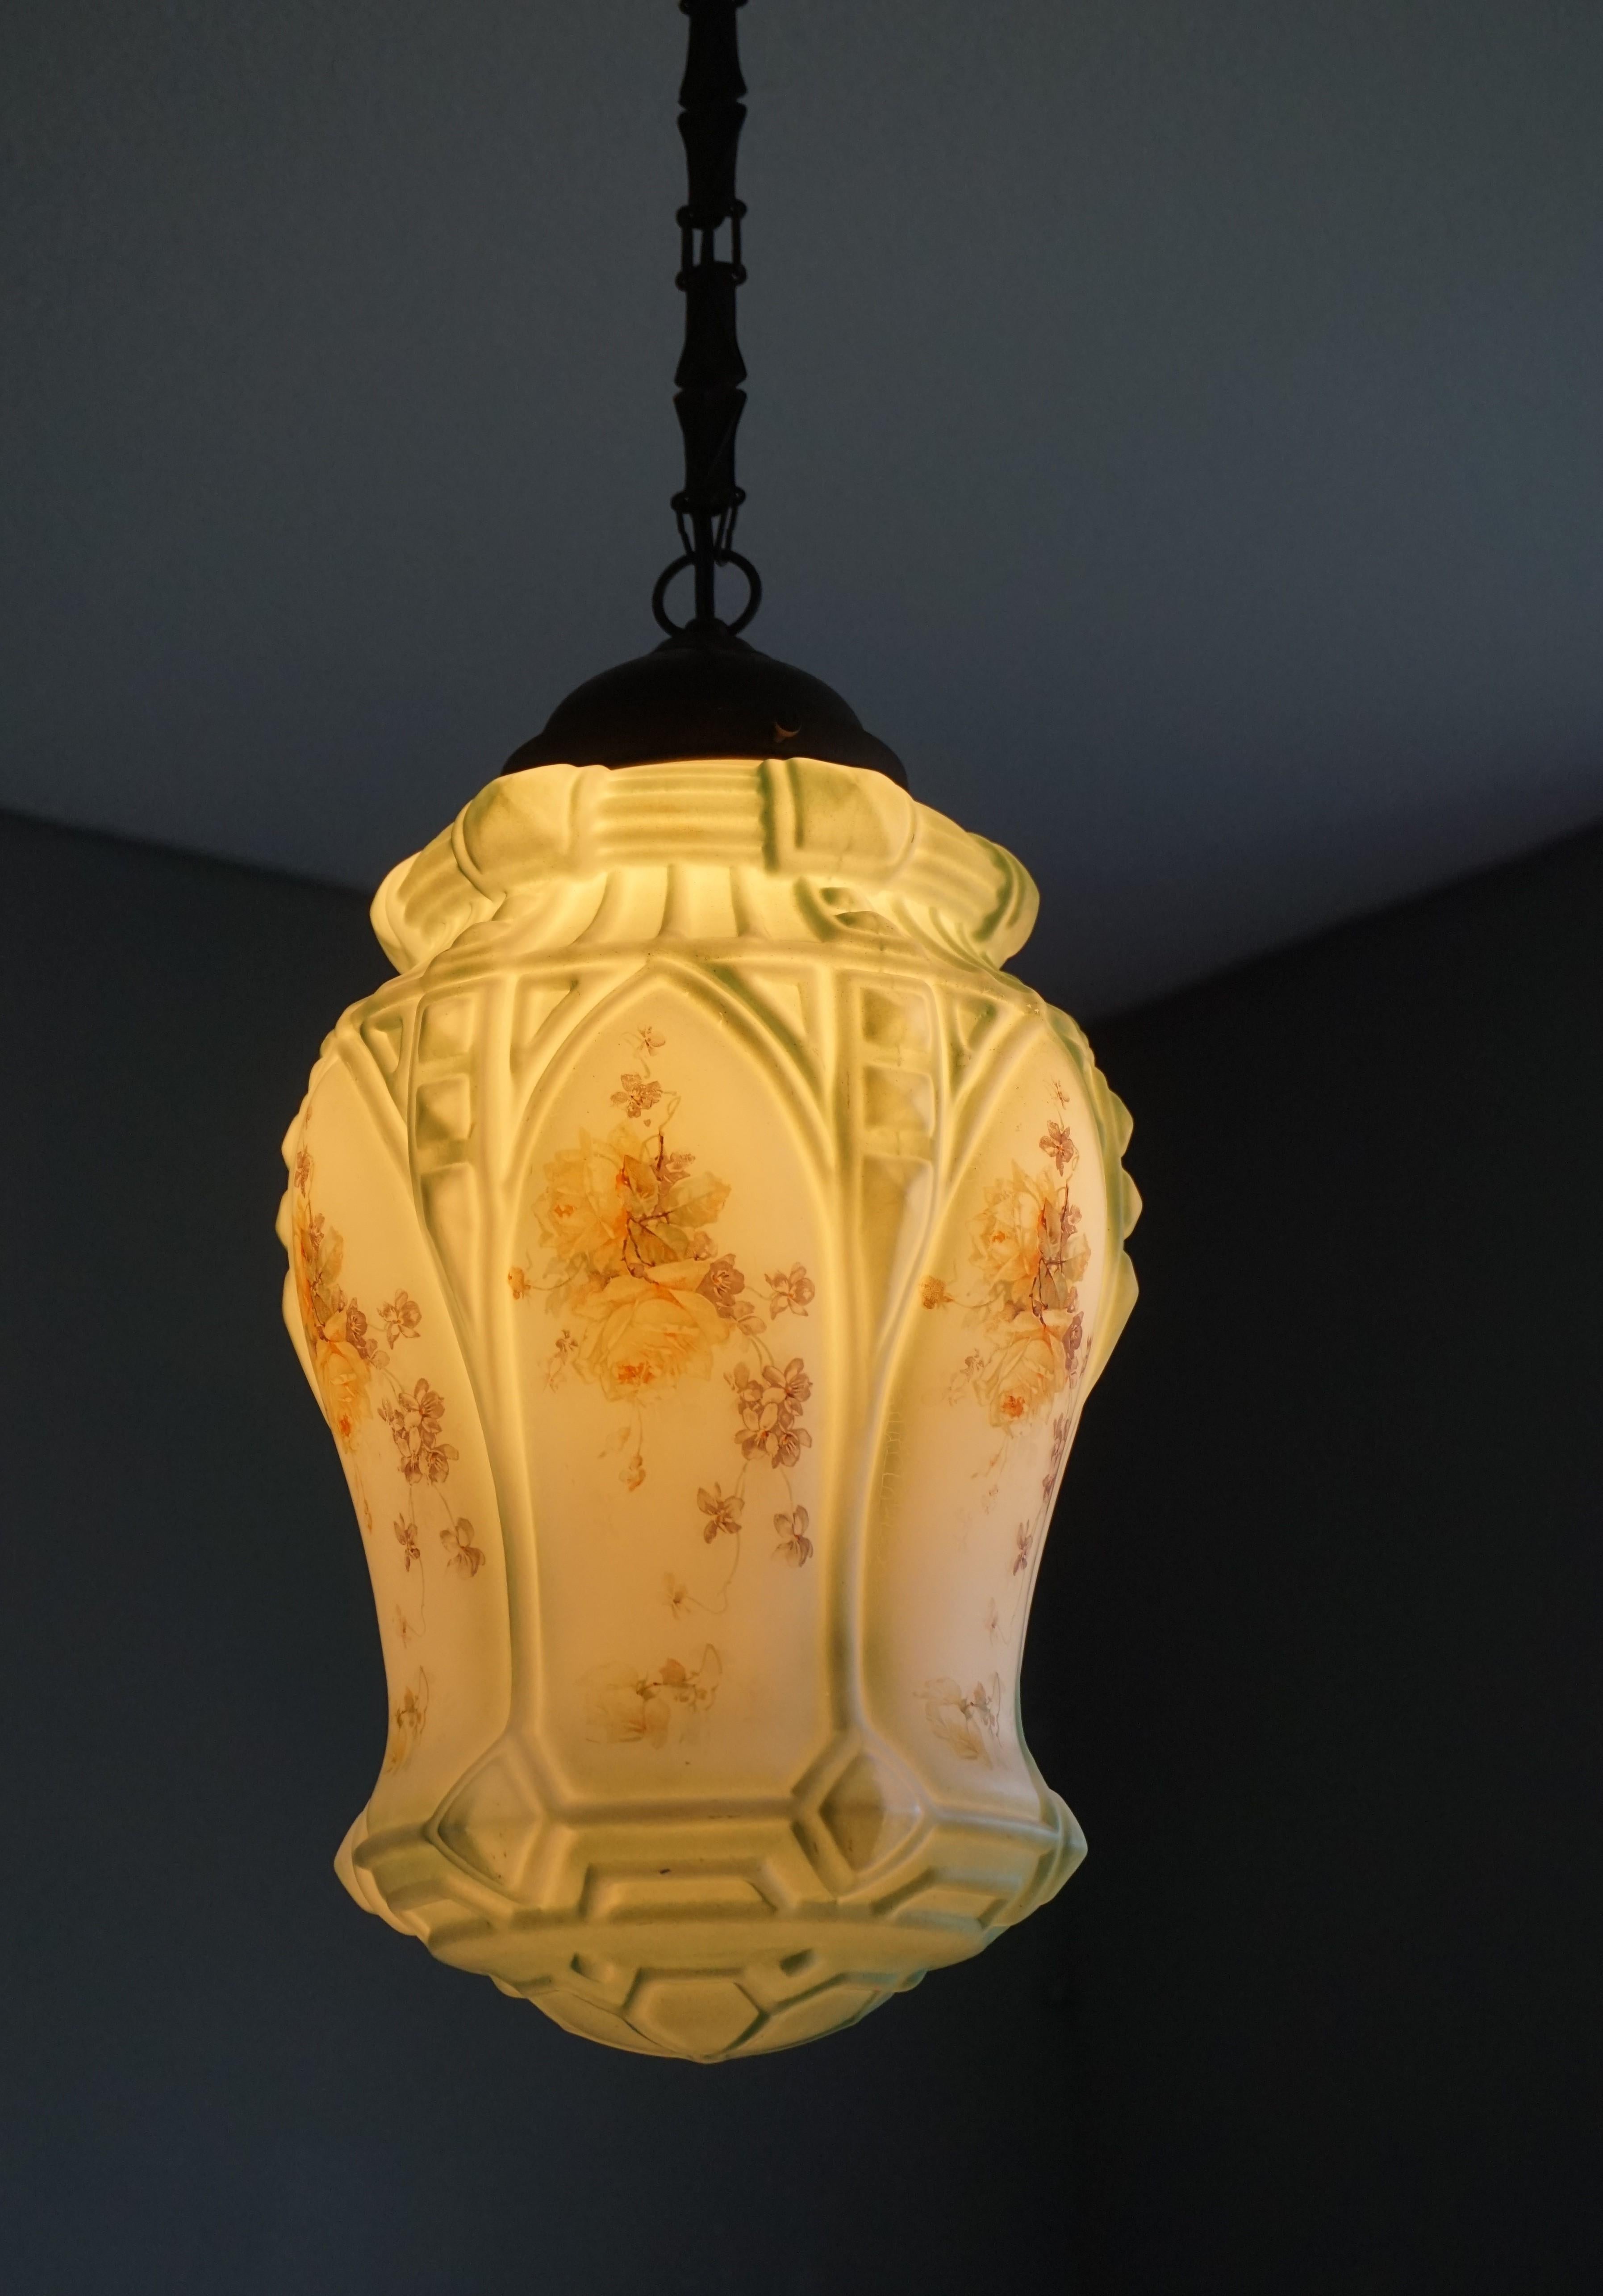 English Arts & Crafts Flowers Decorated Opaline Glass Pendant / Light Fixture (Handgefertigt)